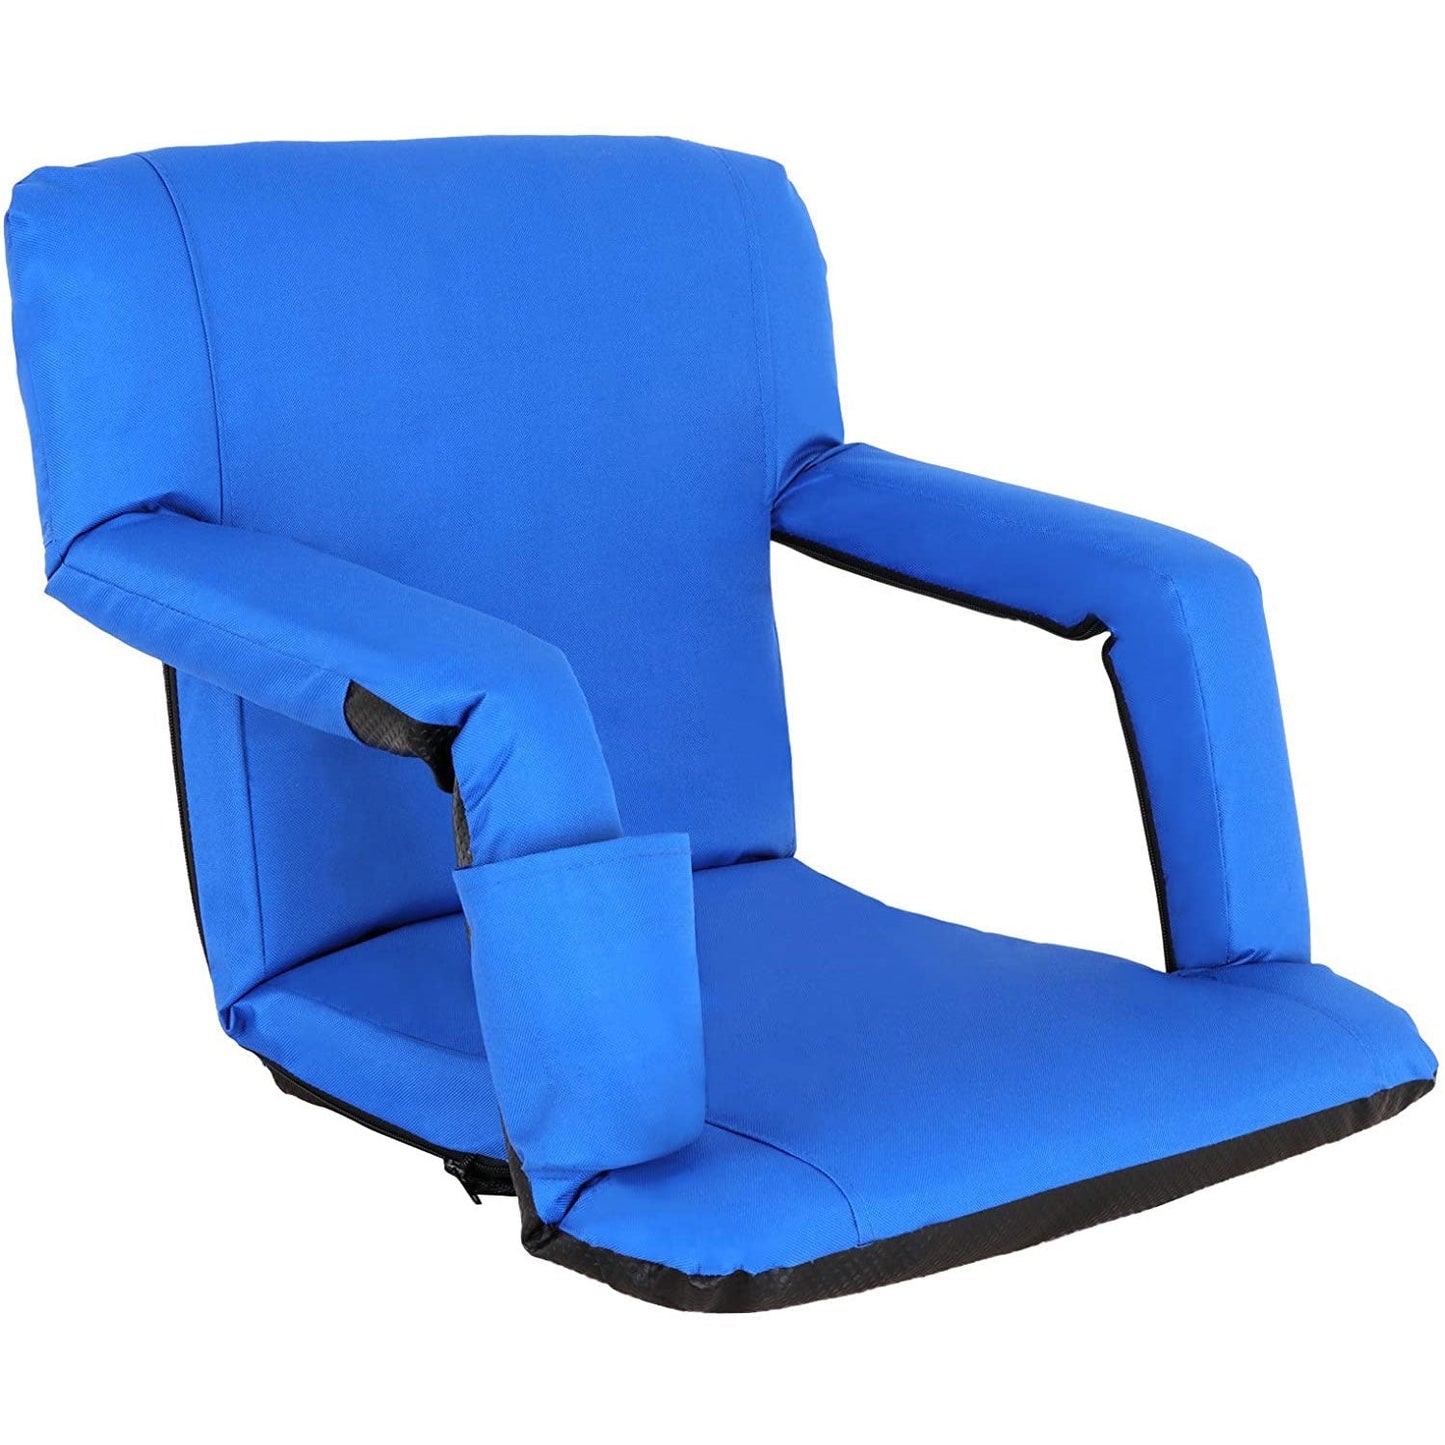 Portable Stadium Seat Chair Blue